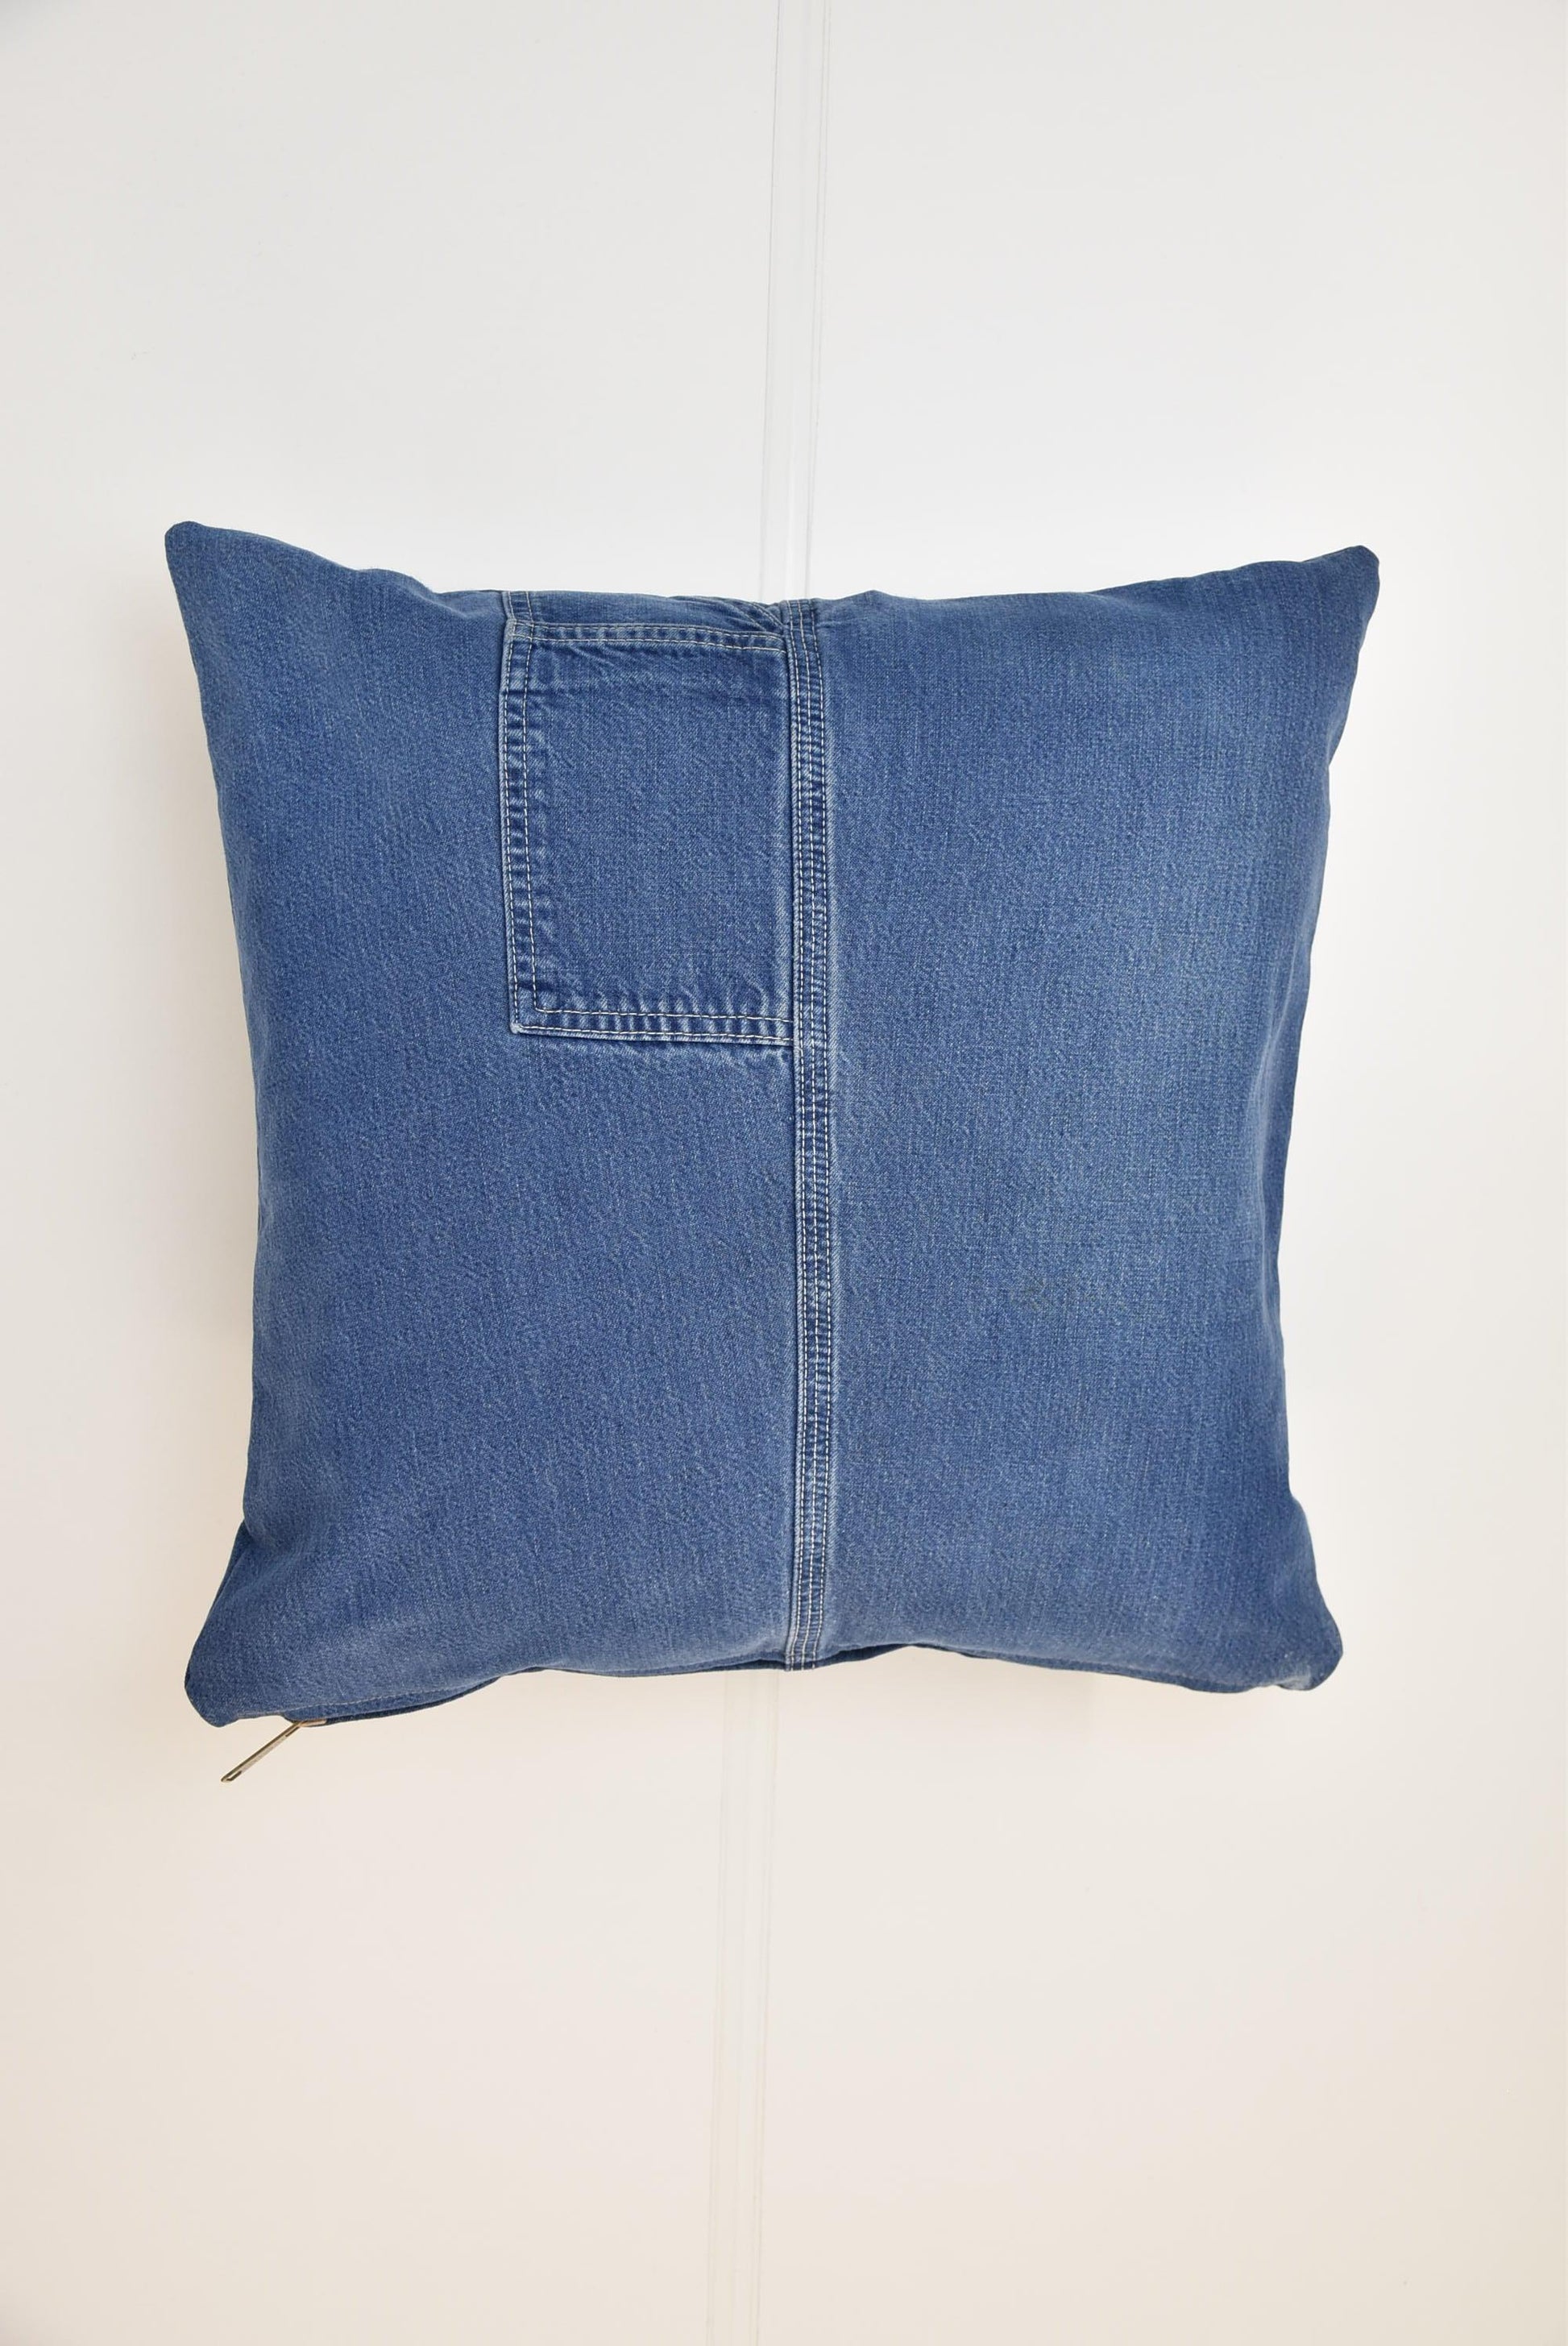 Reworked Carhartt Cushion (Denim) - Slayyy Vintage